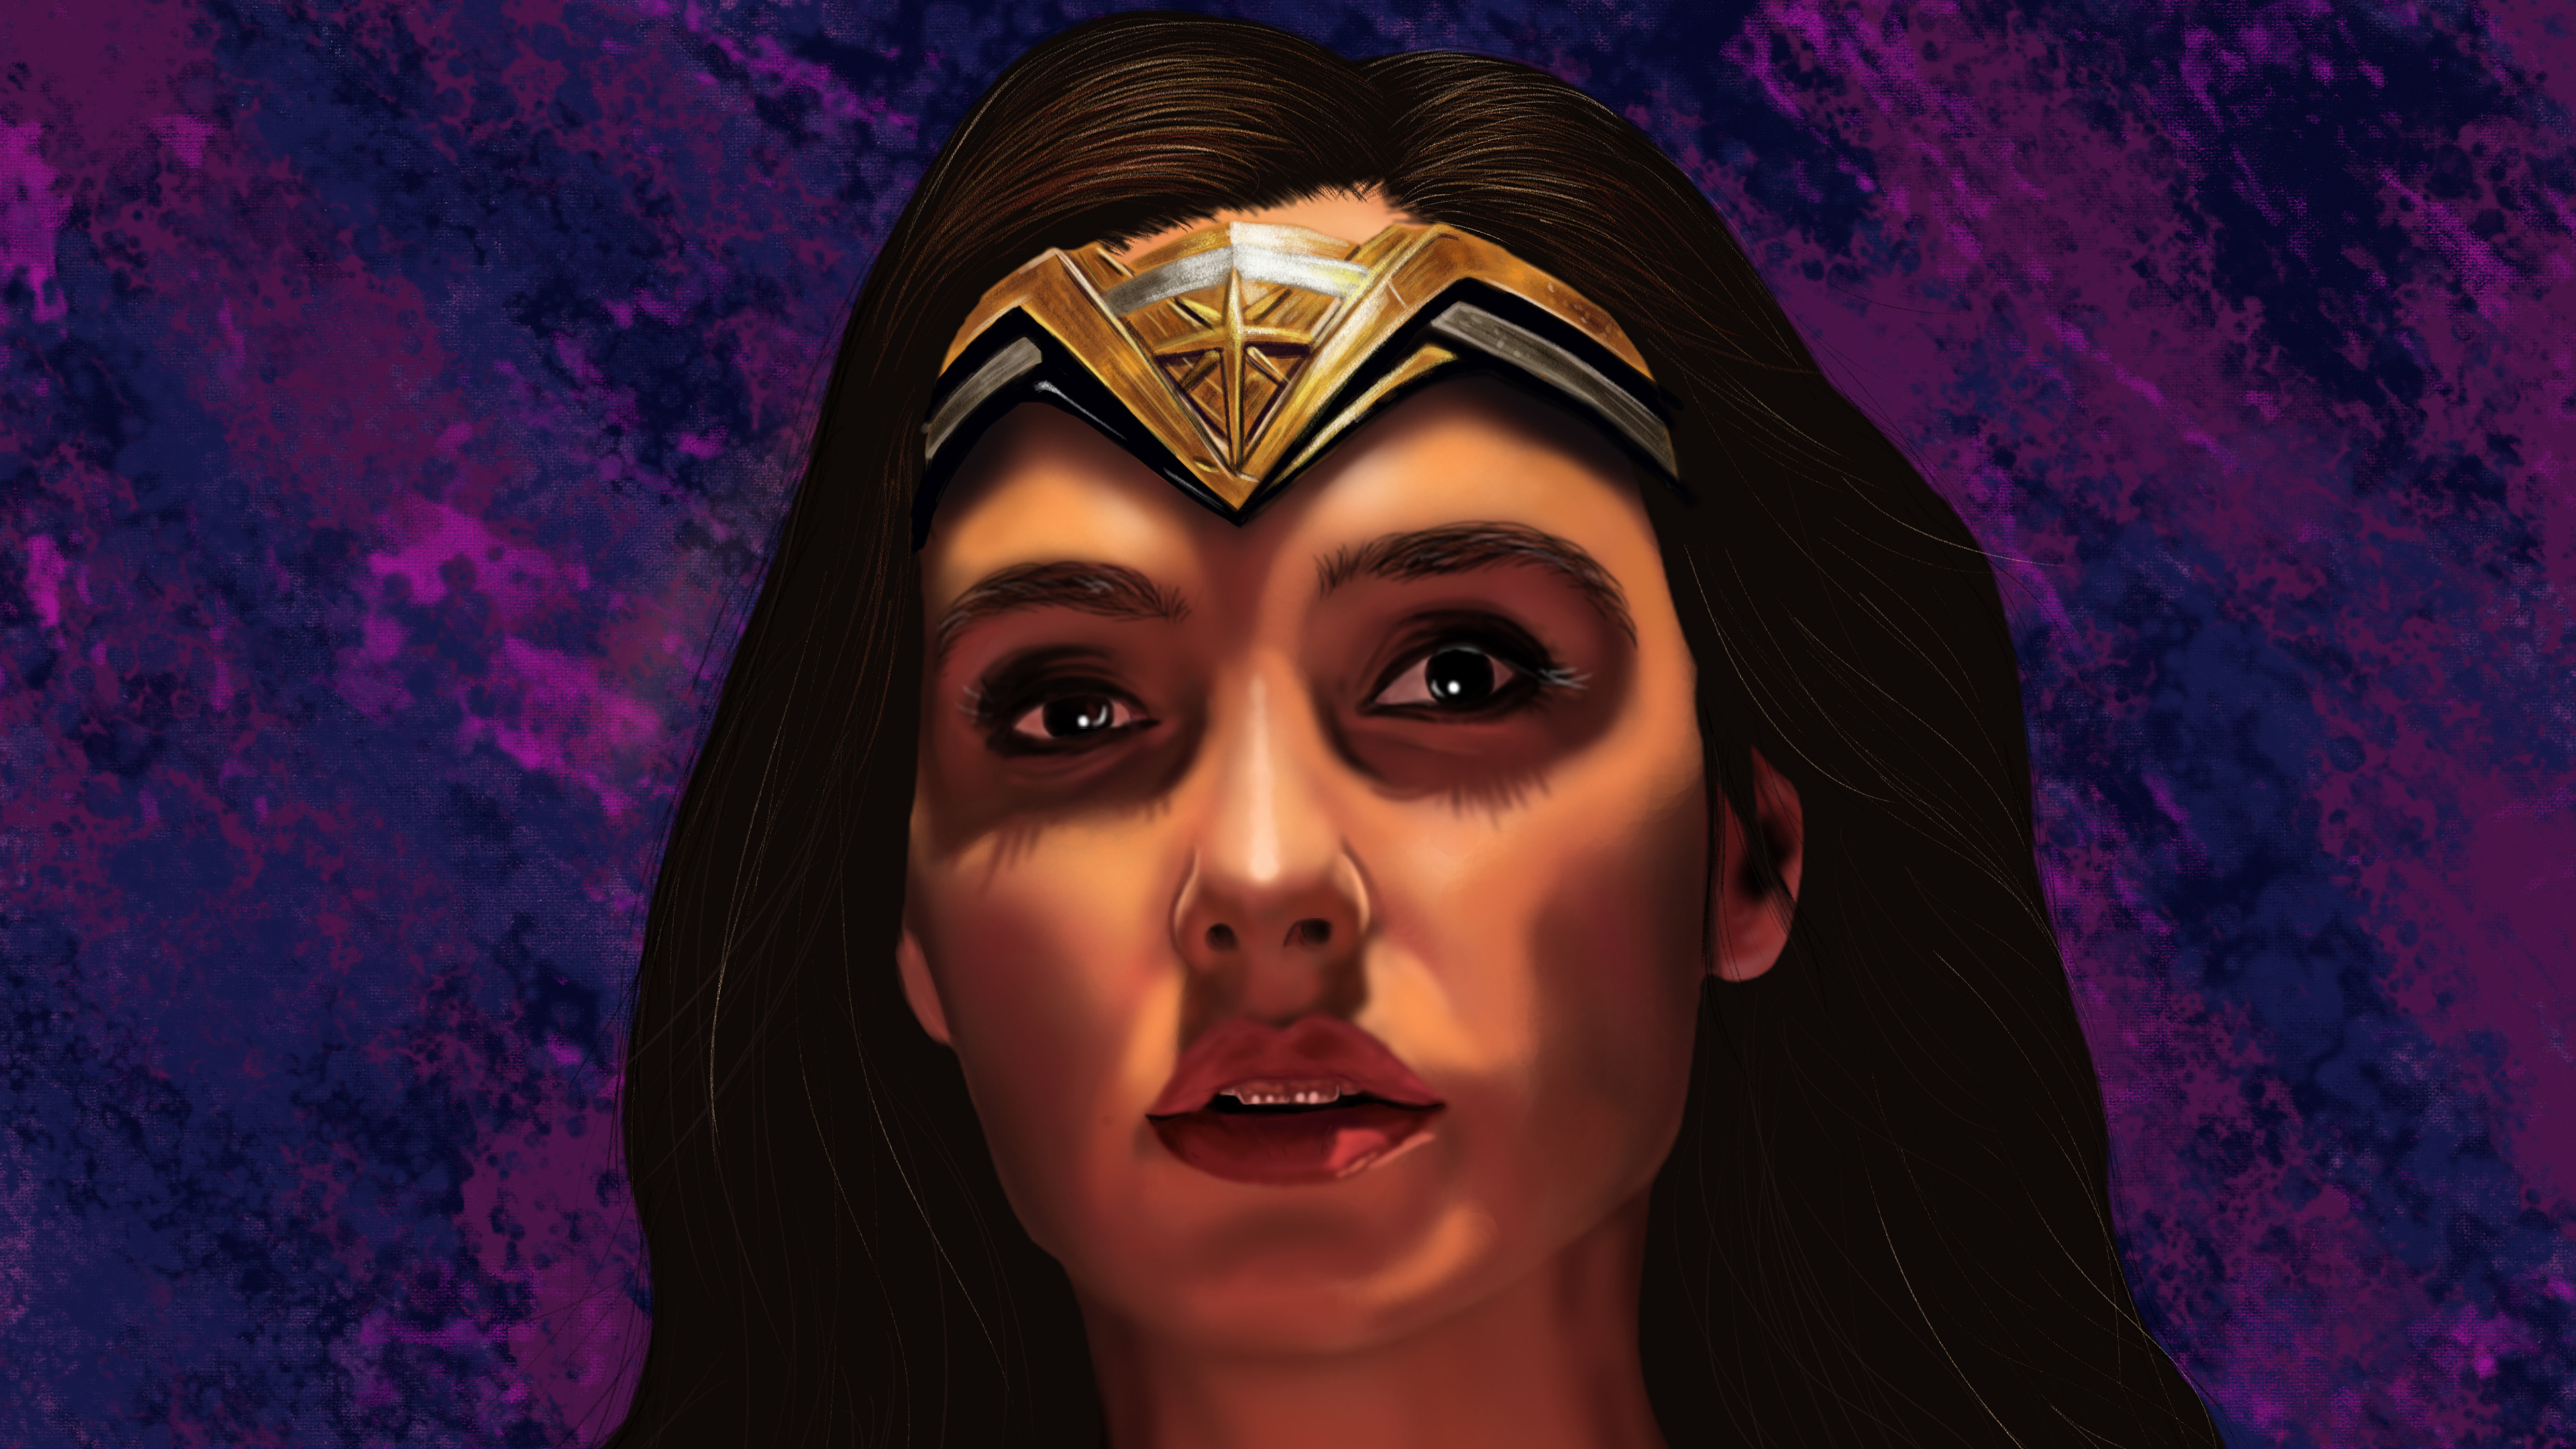 Wallpaper 4k Wonder Woman 4k Behance 4k Wallpapers Artwork